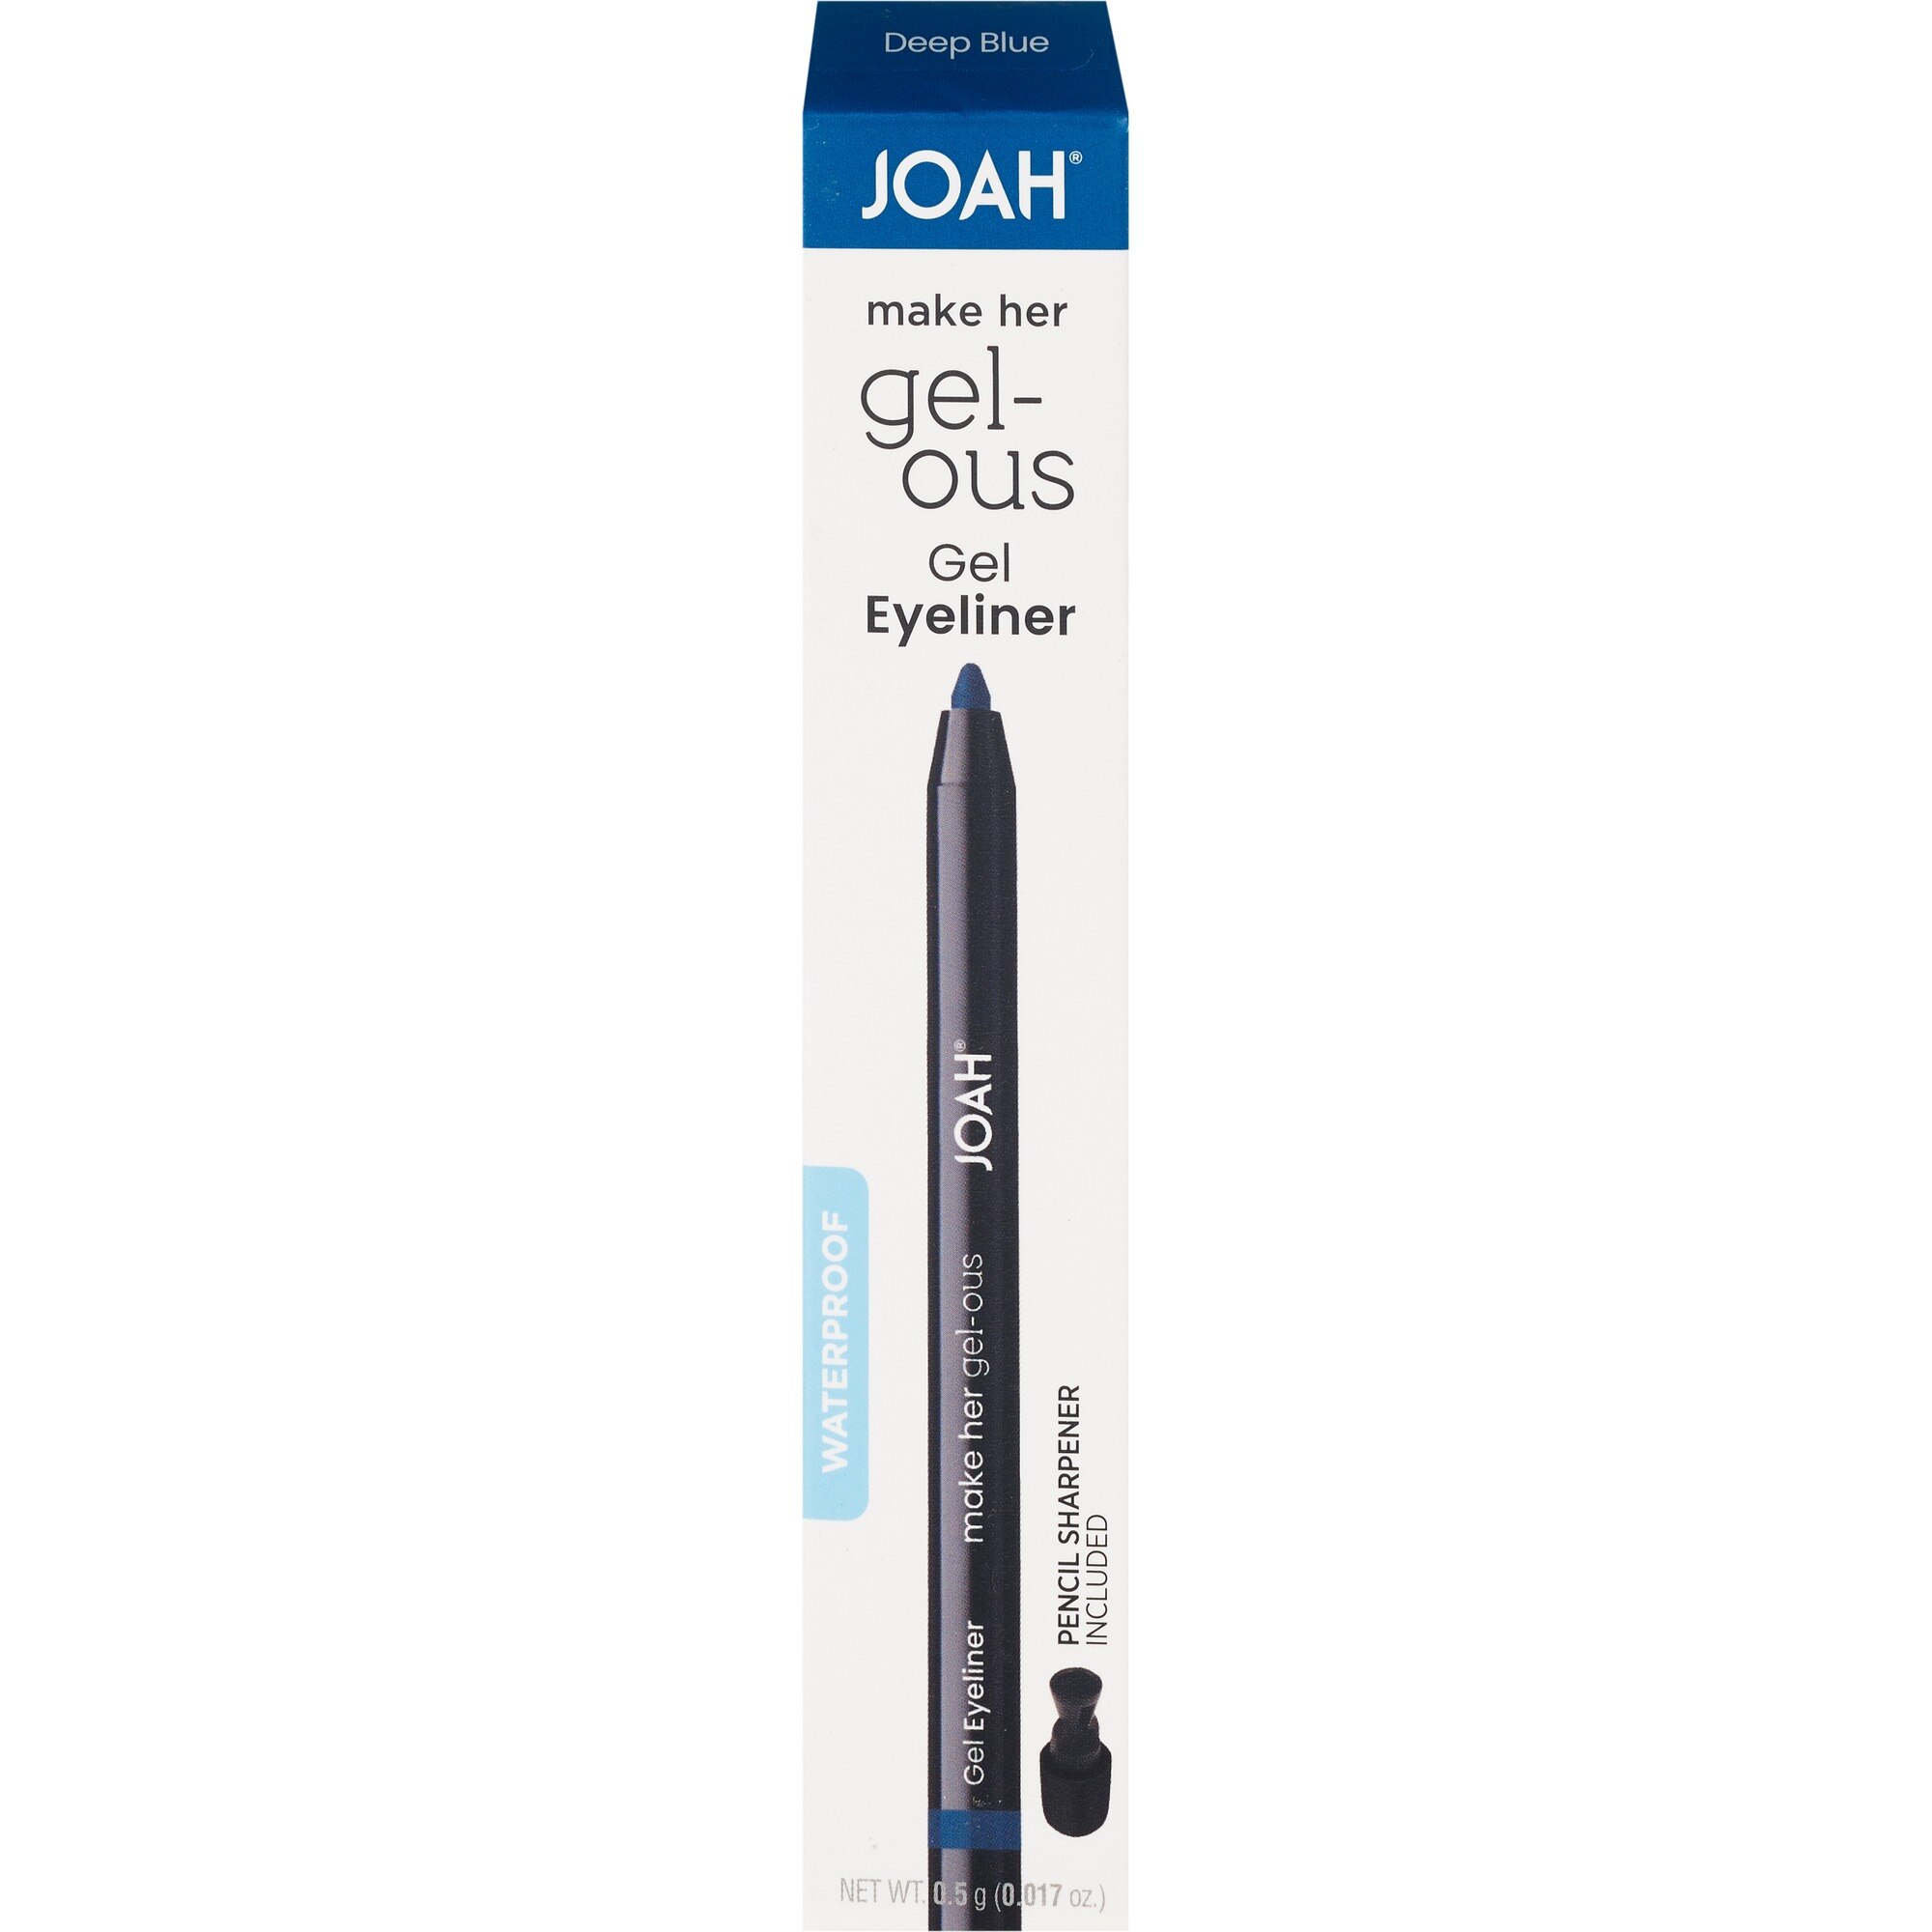 JOAH Make Her Gel-ous Gel Eyeliner